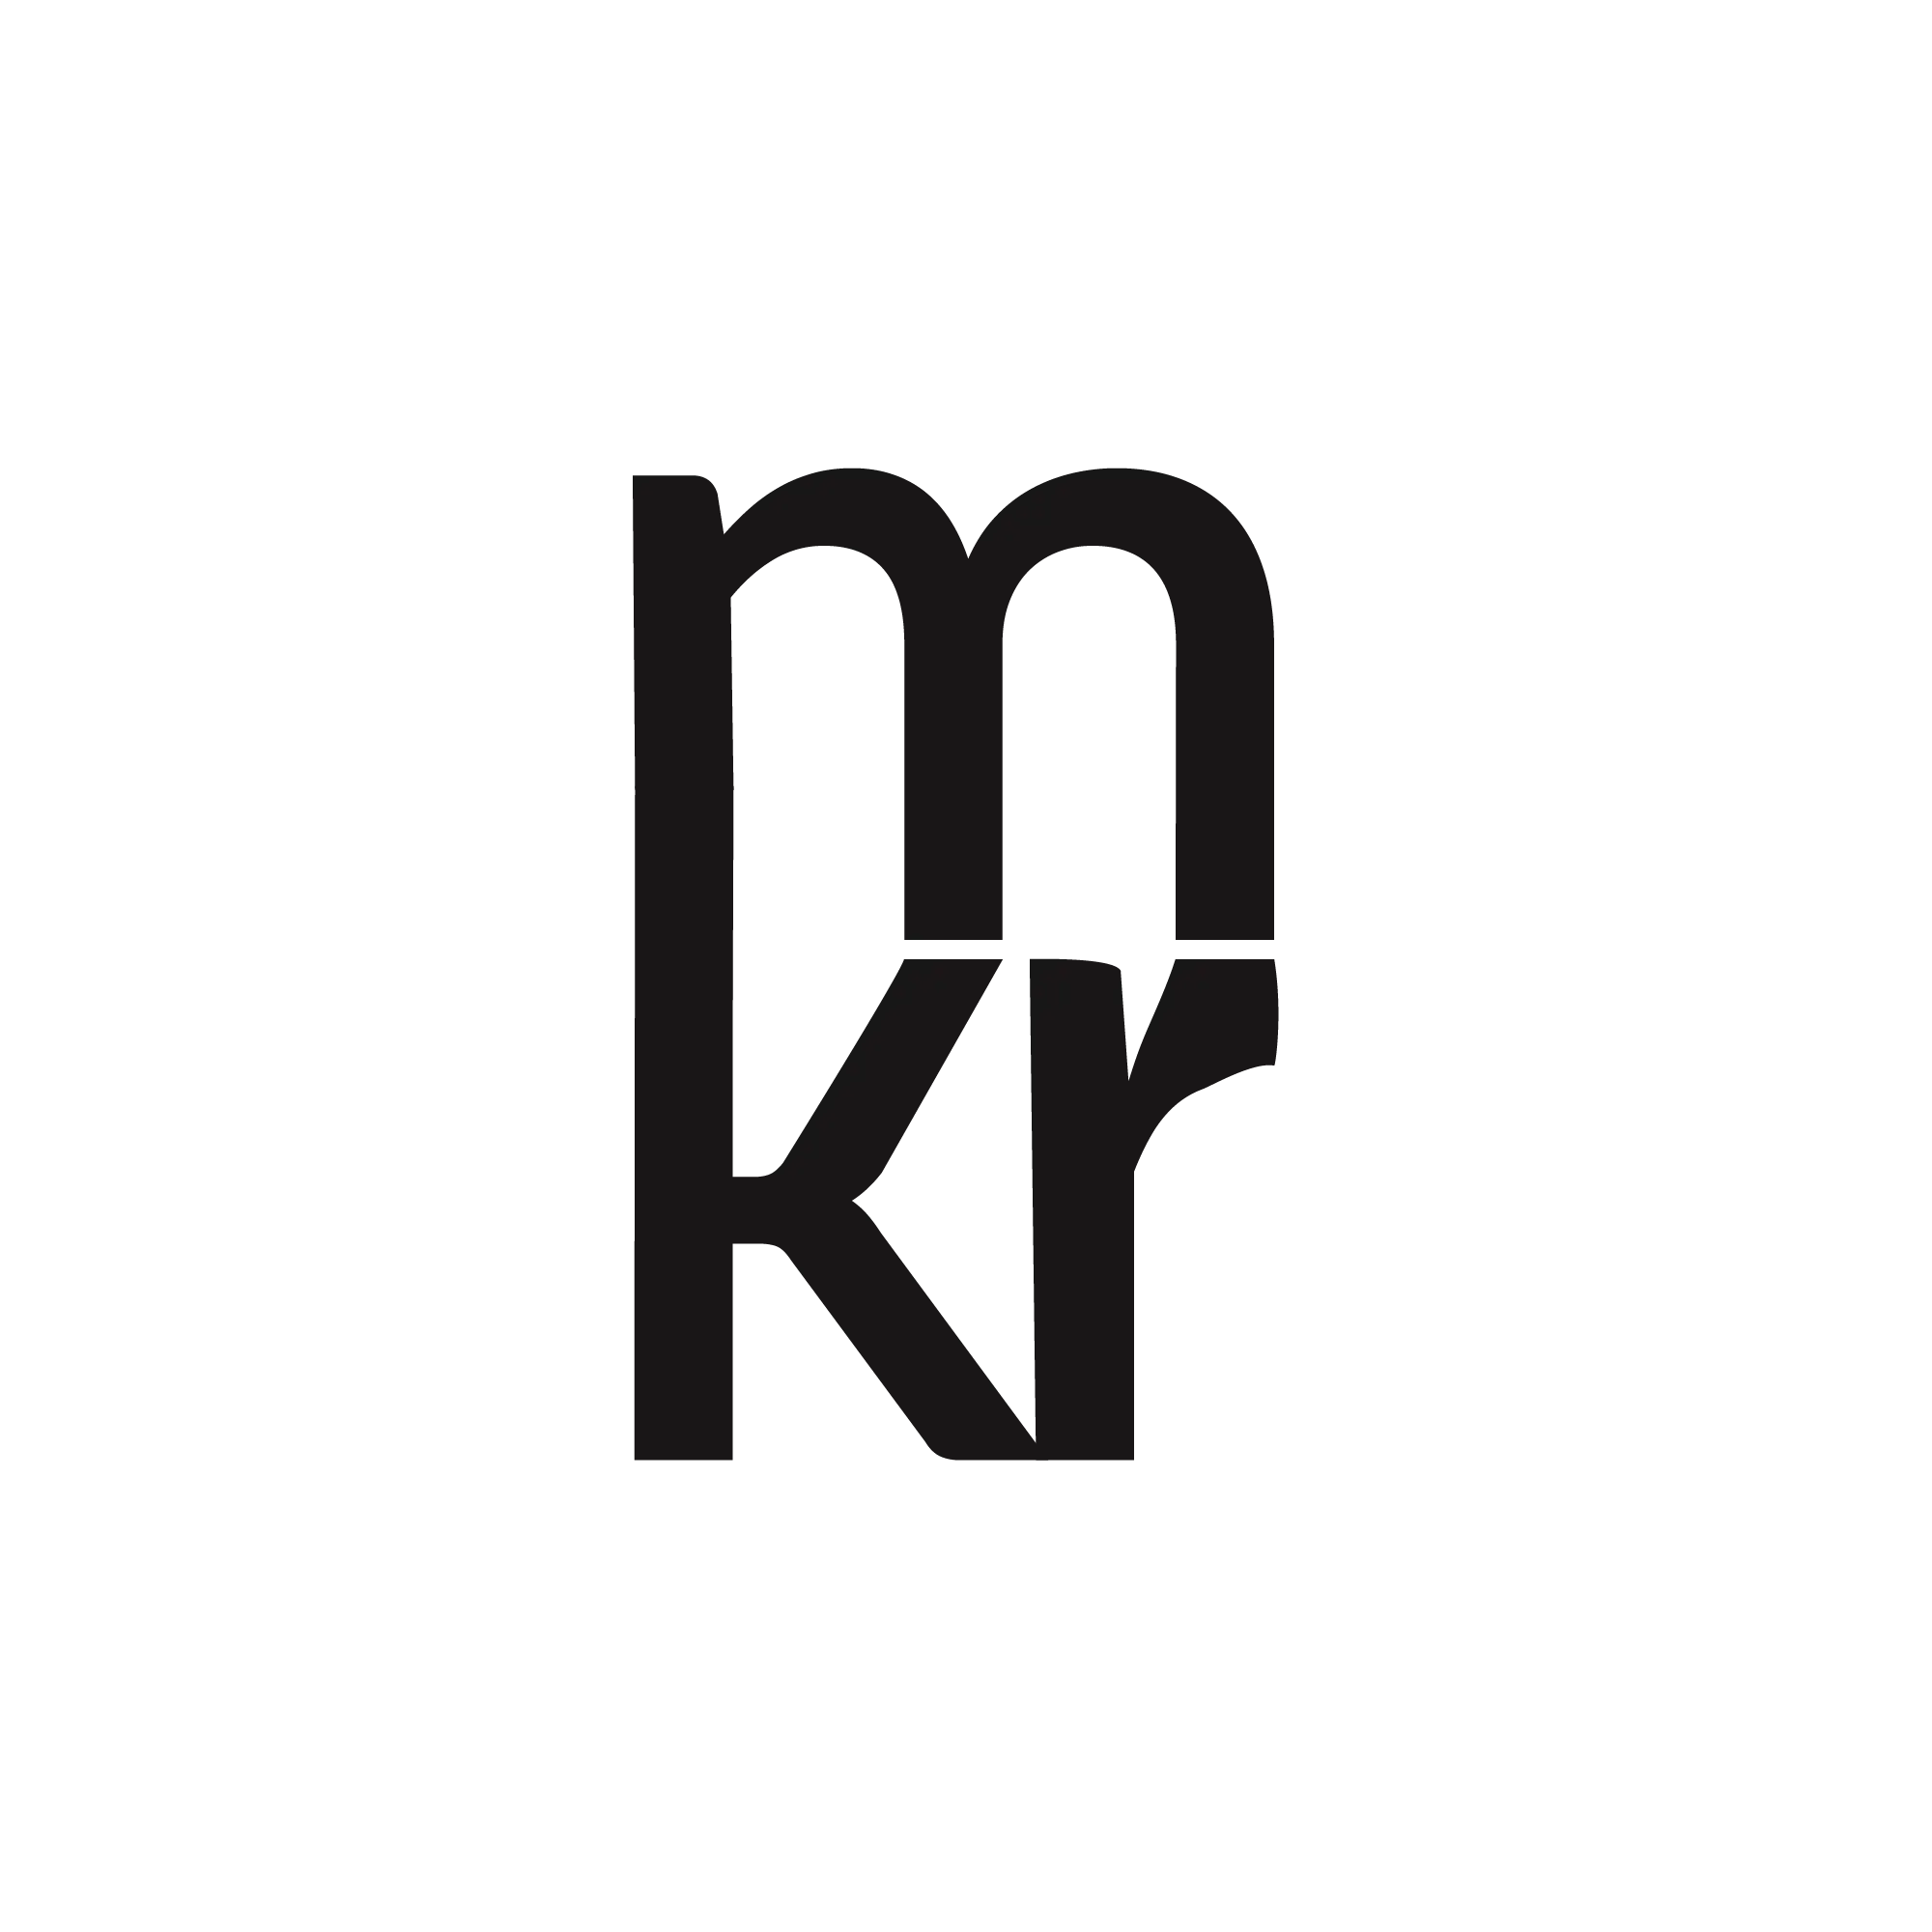 MKRF – Markus Kröger Fotografie